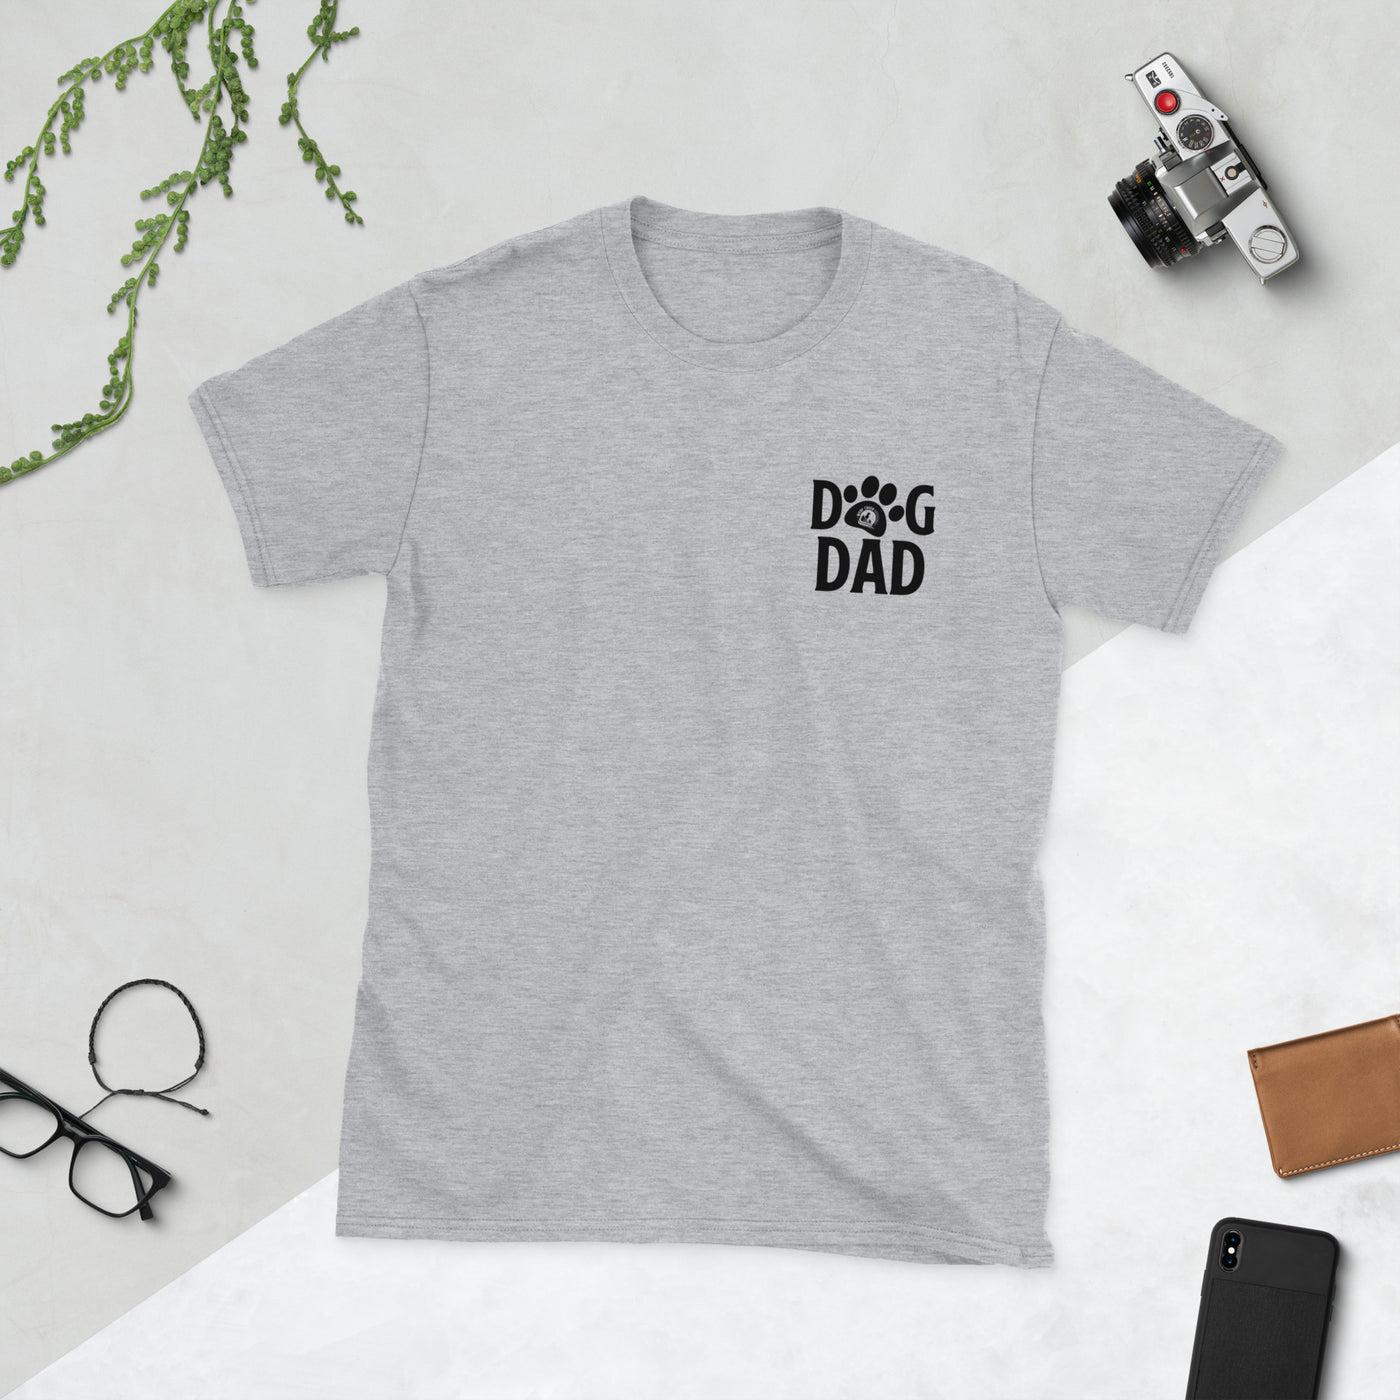 Short-Sleeve Dog Dad's T-Shirt - Woof Creek Dog Wellness